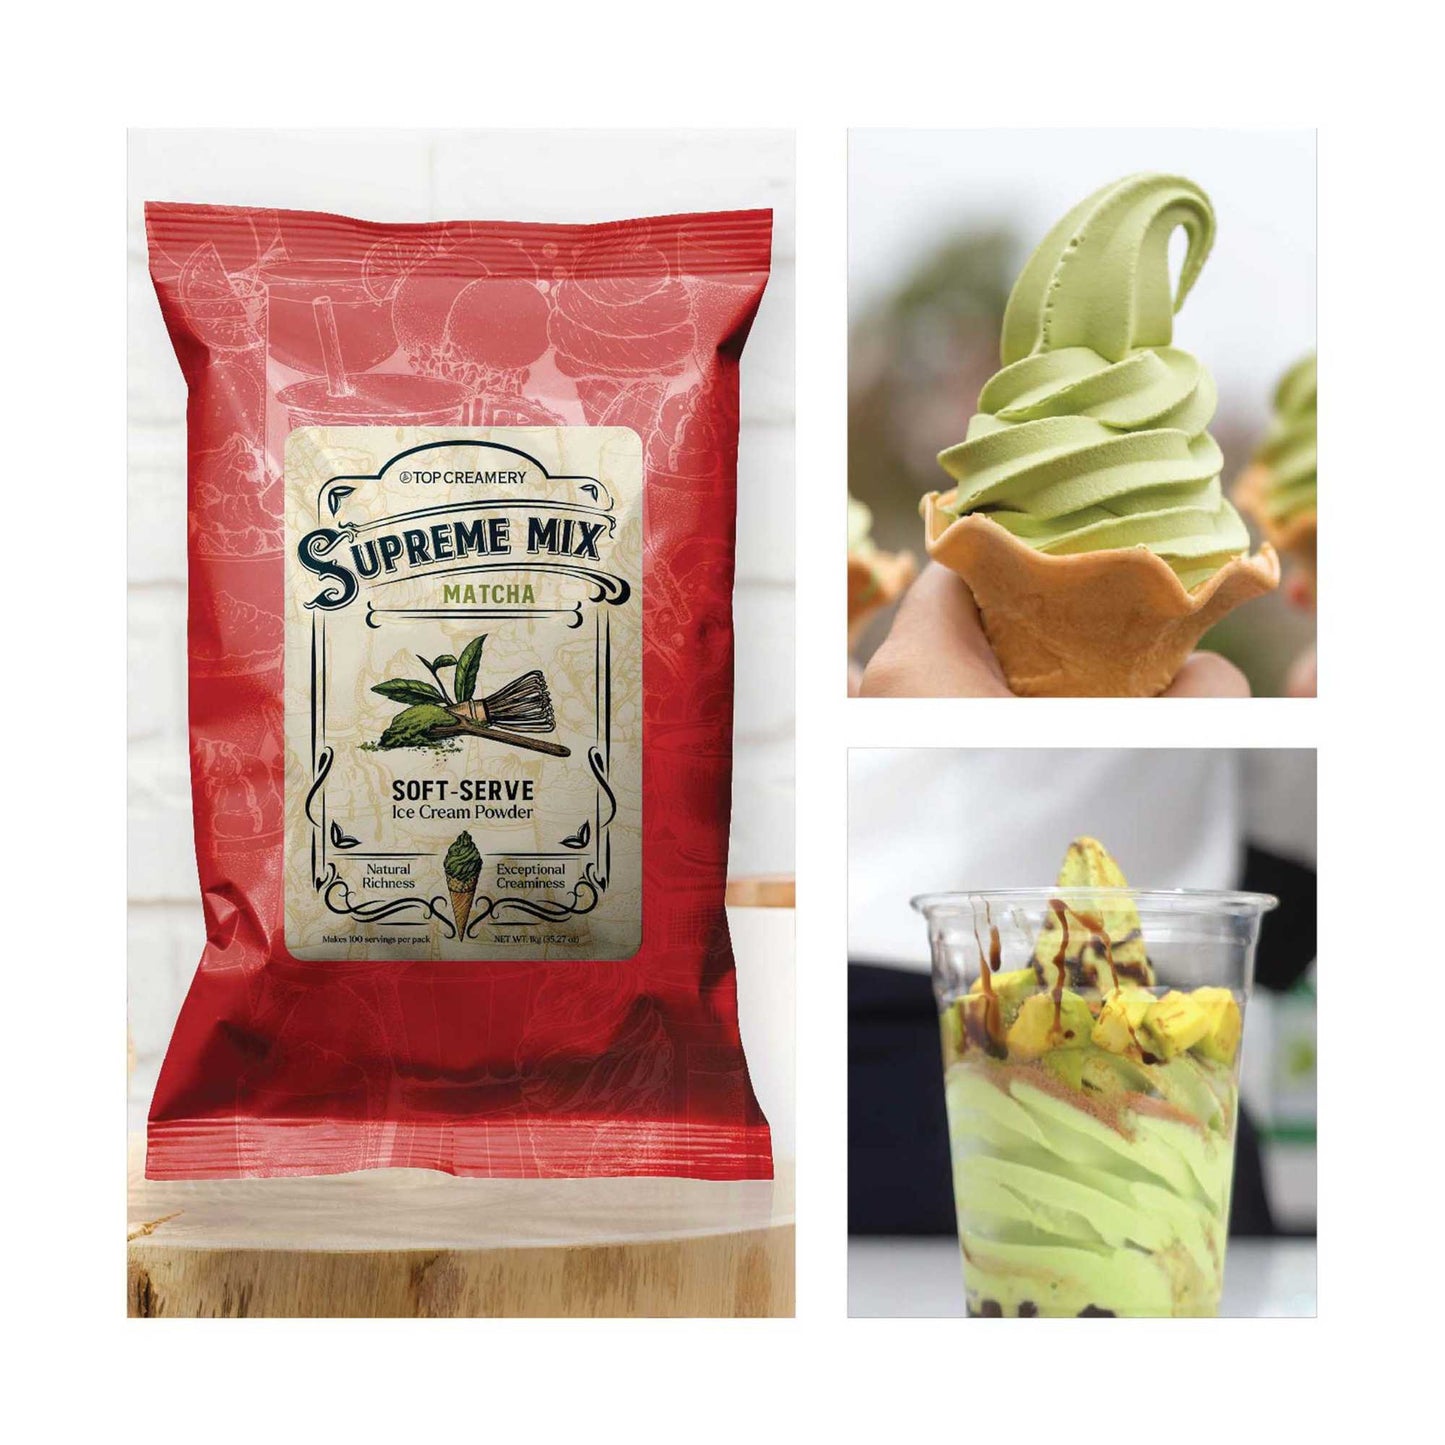 TOP Creamery Supreme Matcha Soft Serve Ice Cream Powder Premix 1kg